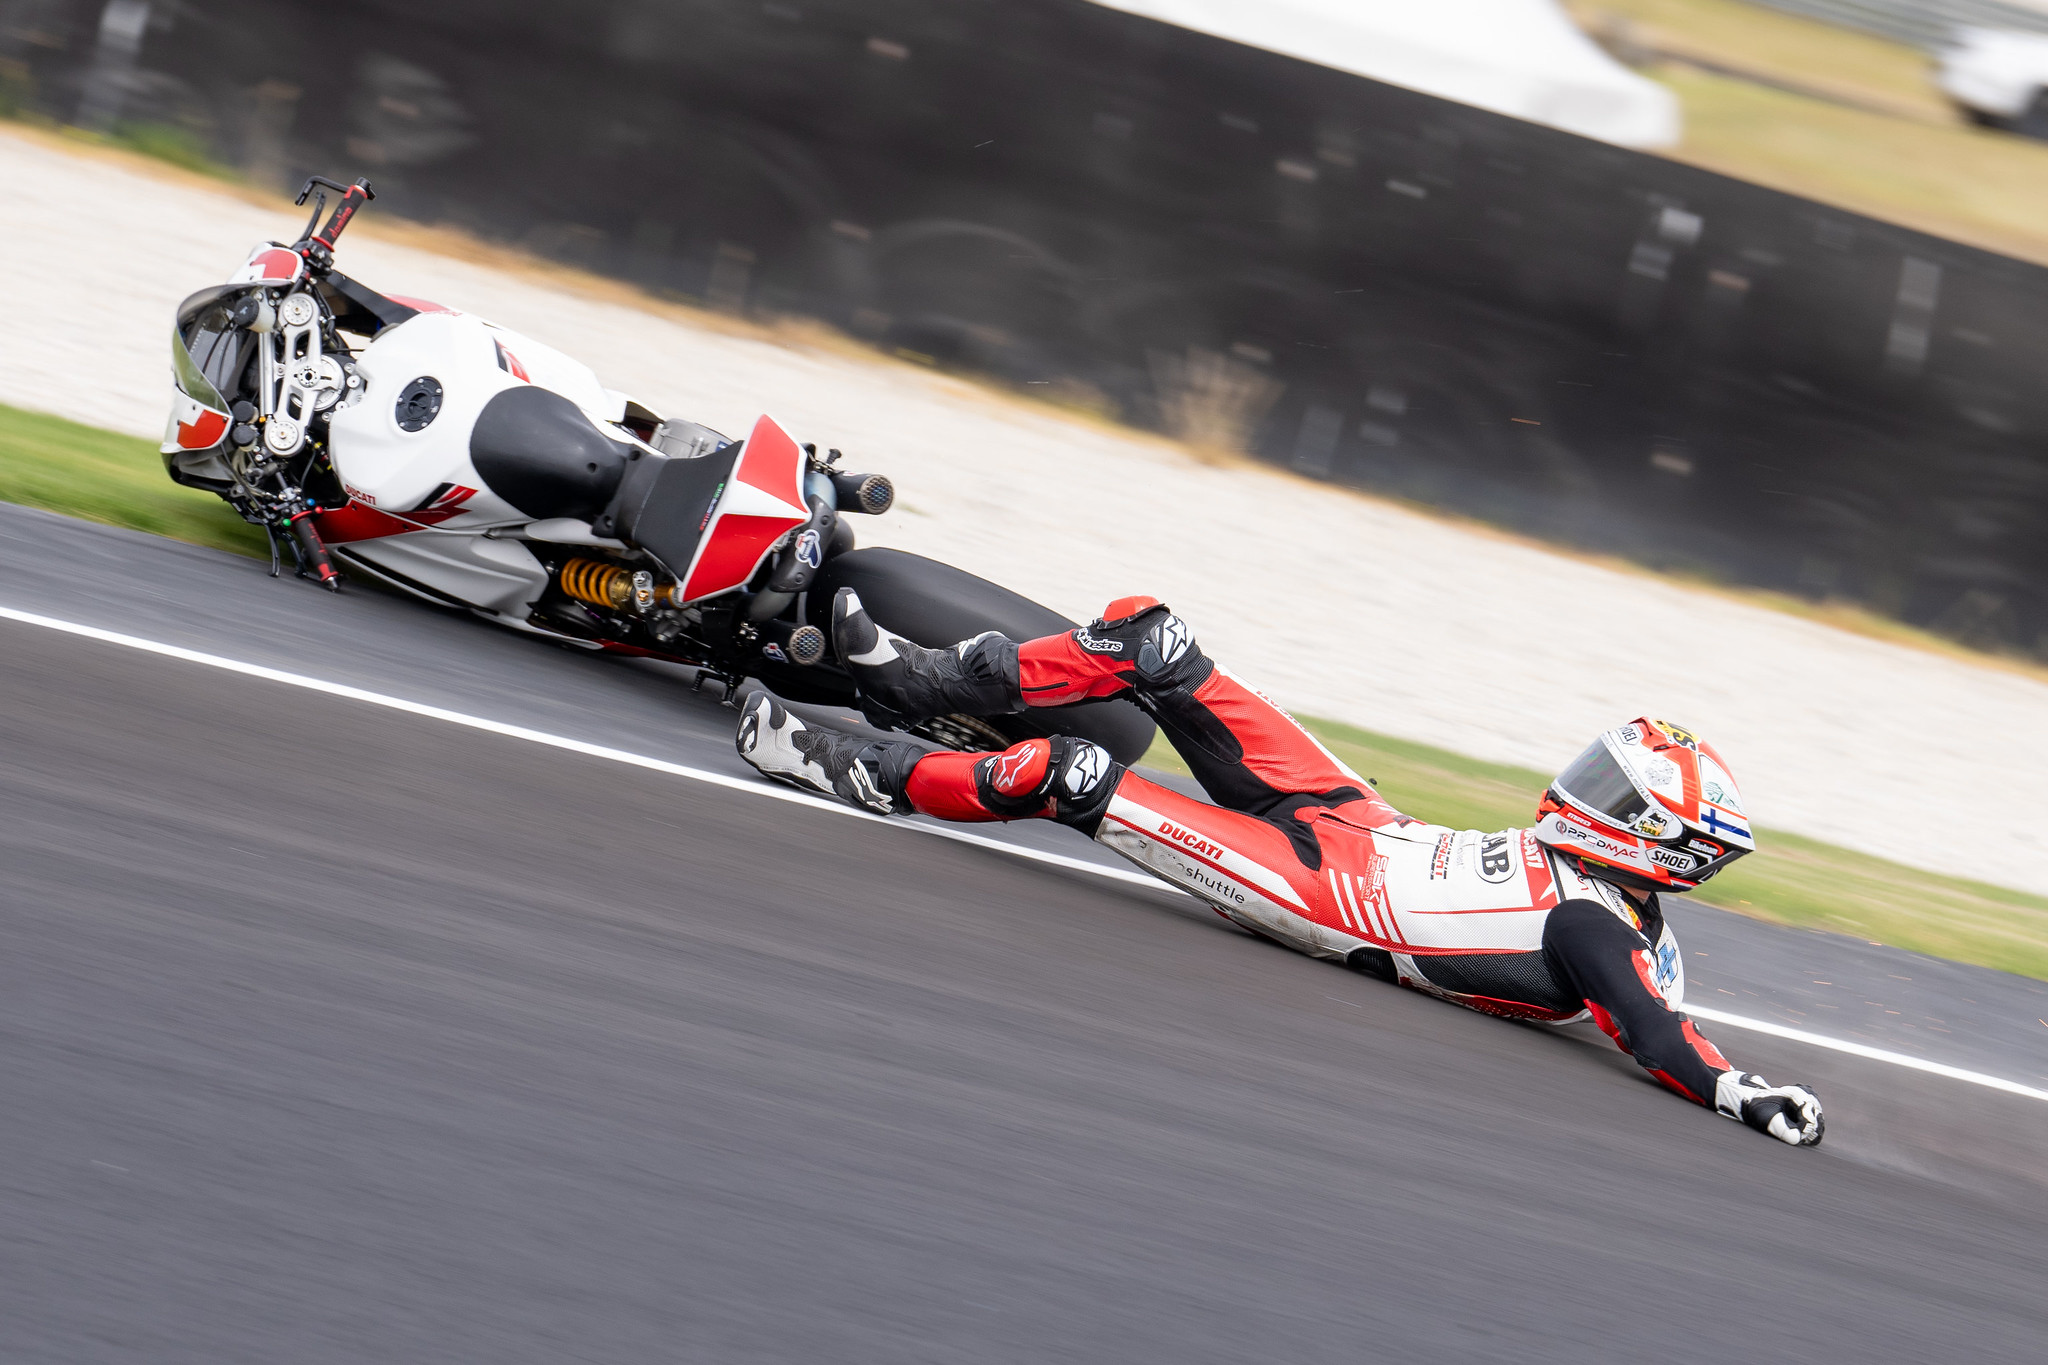 #66 Niki Tuuli - FIN - EAB Racing Team - Ducati Panigale V2